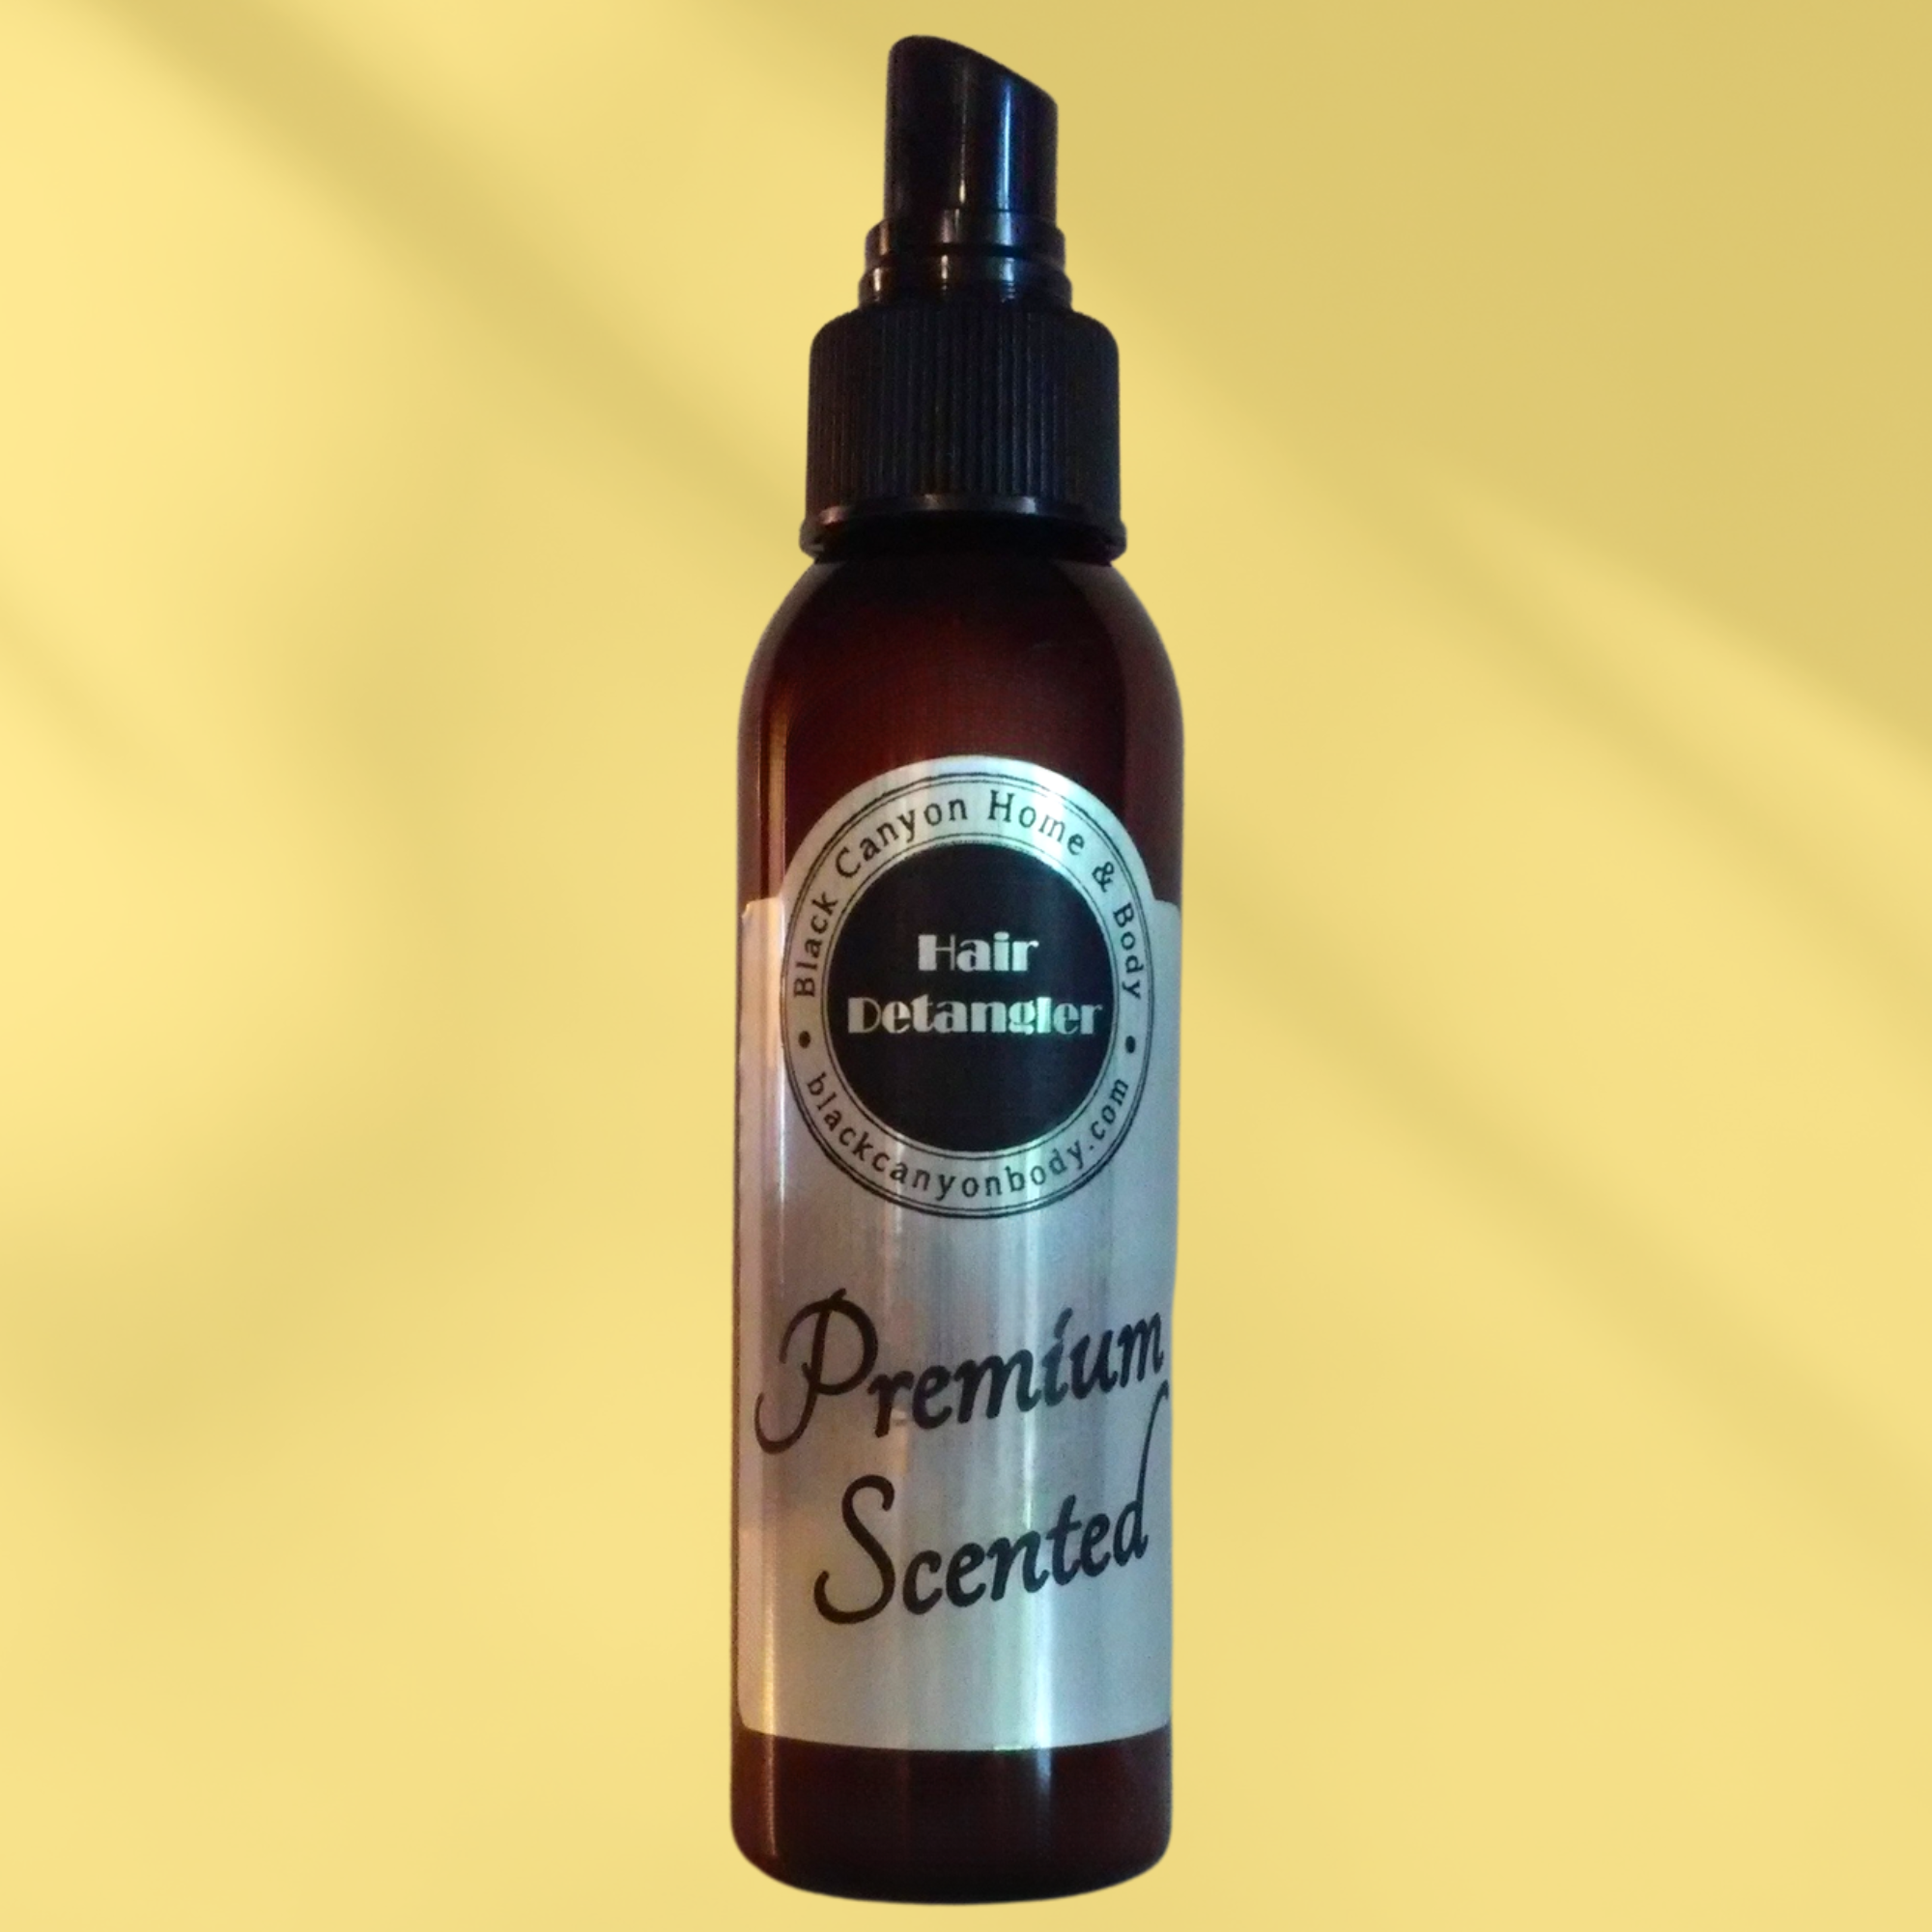 Paydens Cobalt Bay Rum & Tobacco Scented Hair Detangler Spray with Olive Oil For Men